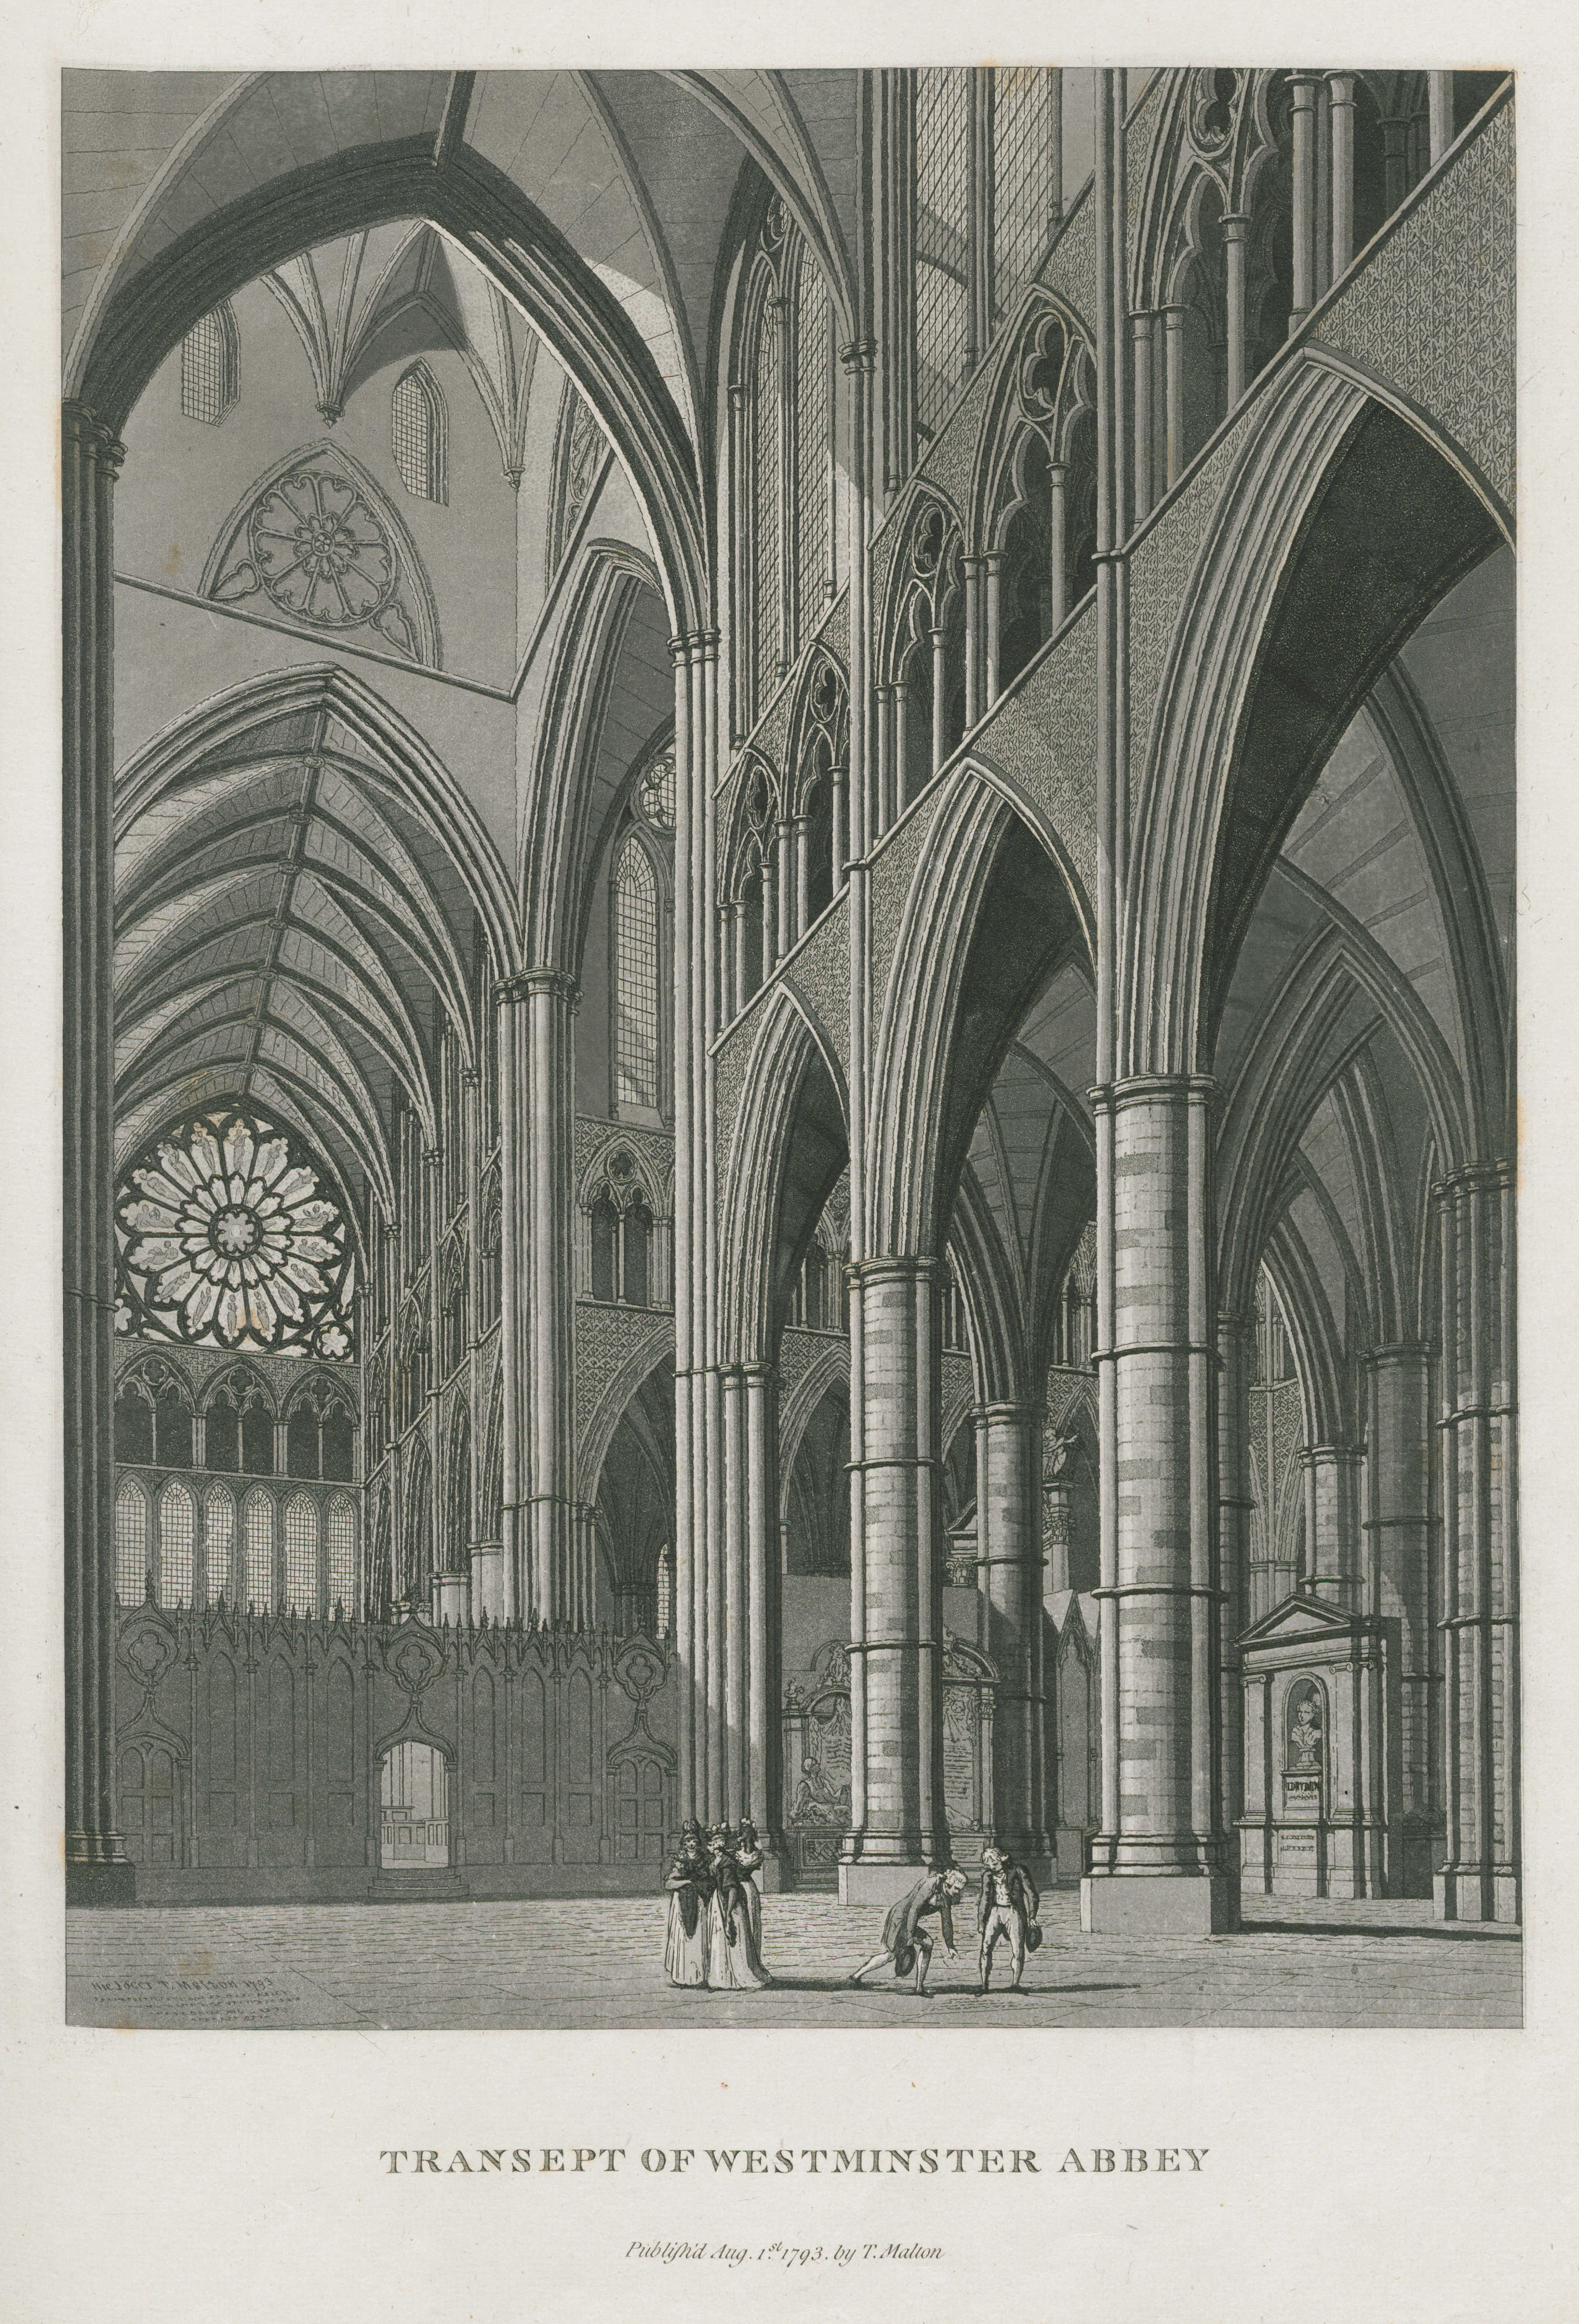 009 - Malton - Transept of Westminster Abbey